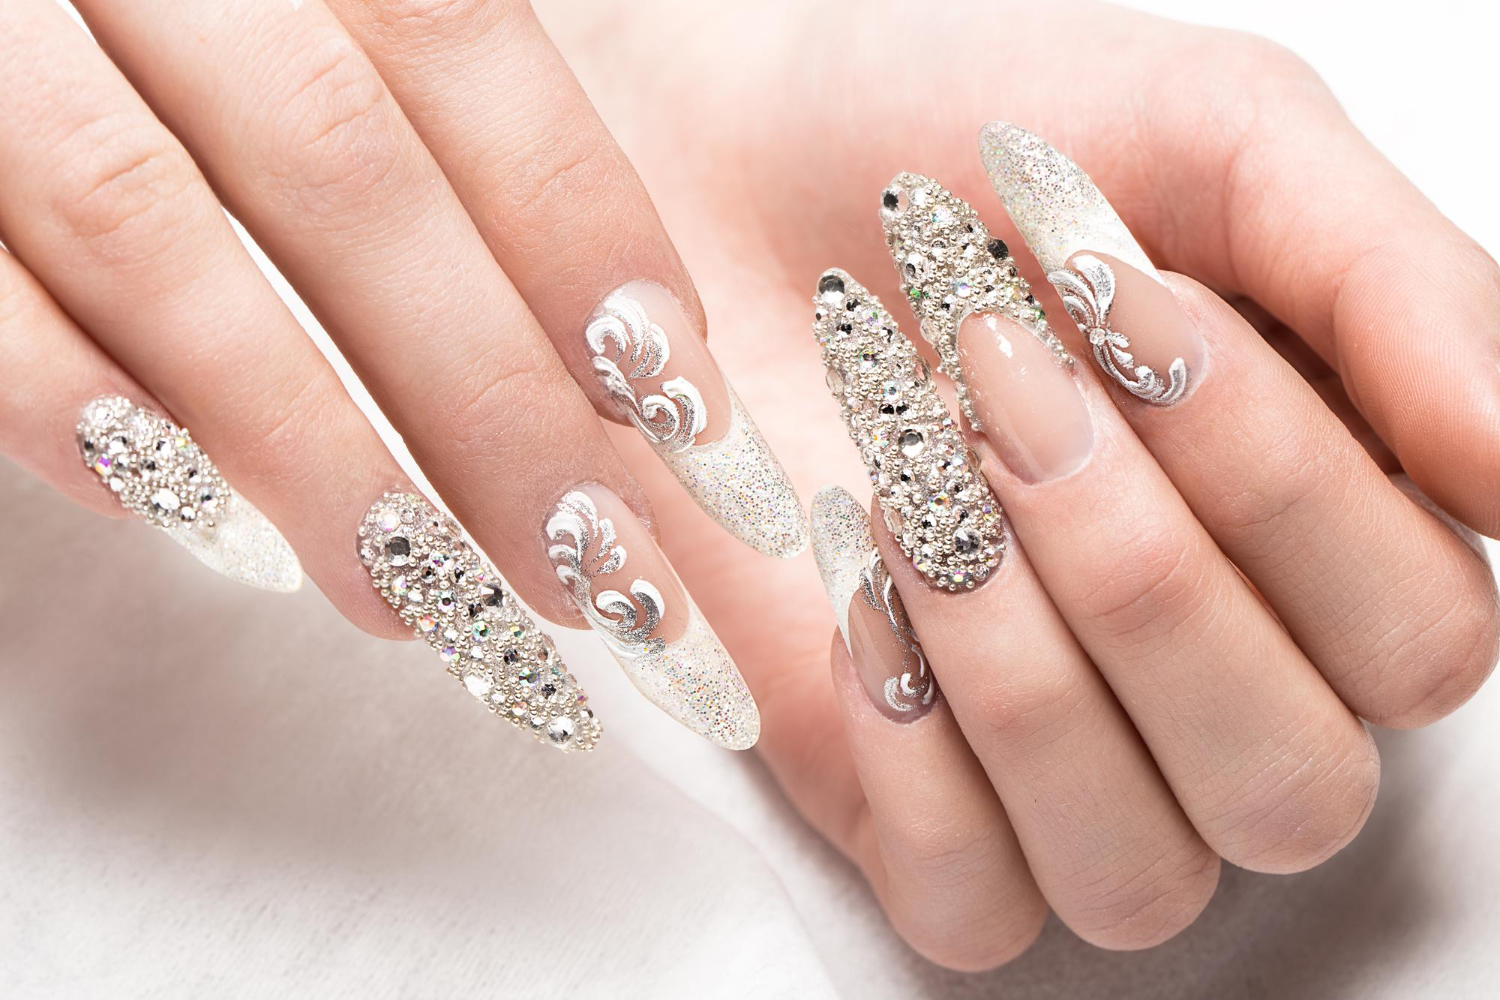 beautifil-wedding-manicure-bride-gentle-tones-with-rhinestone-nail-design-close-up